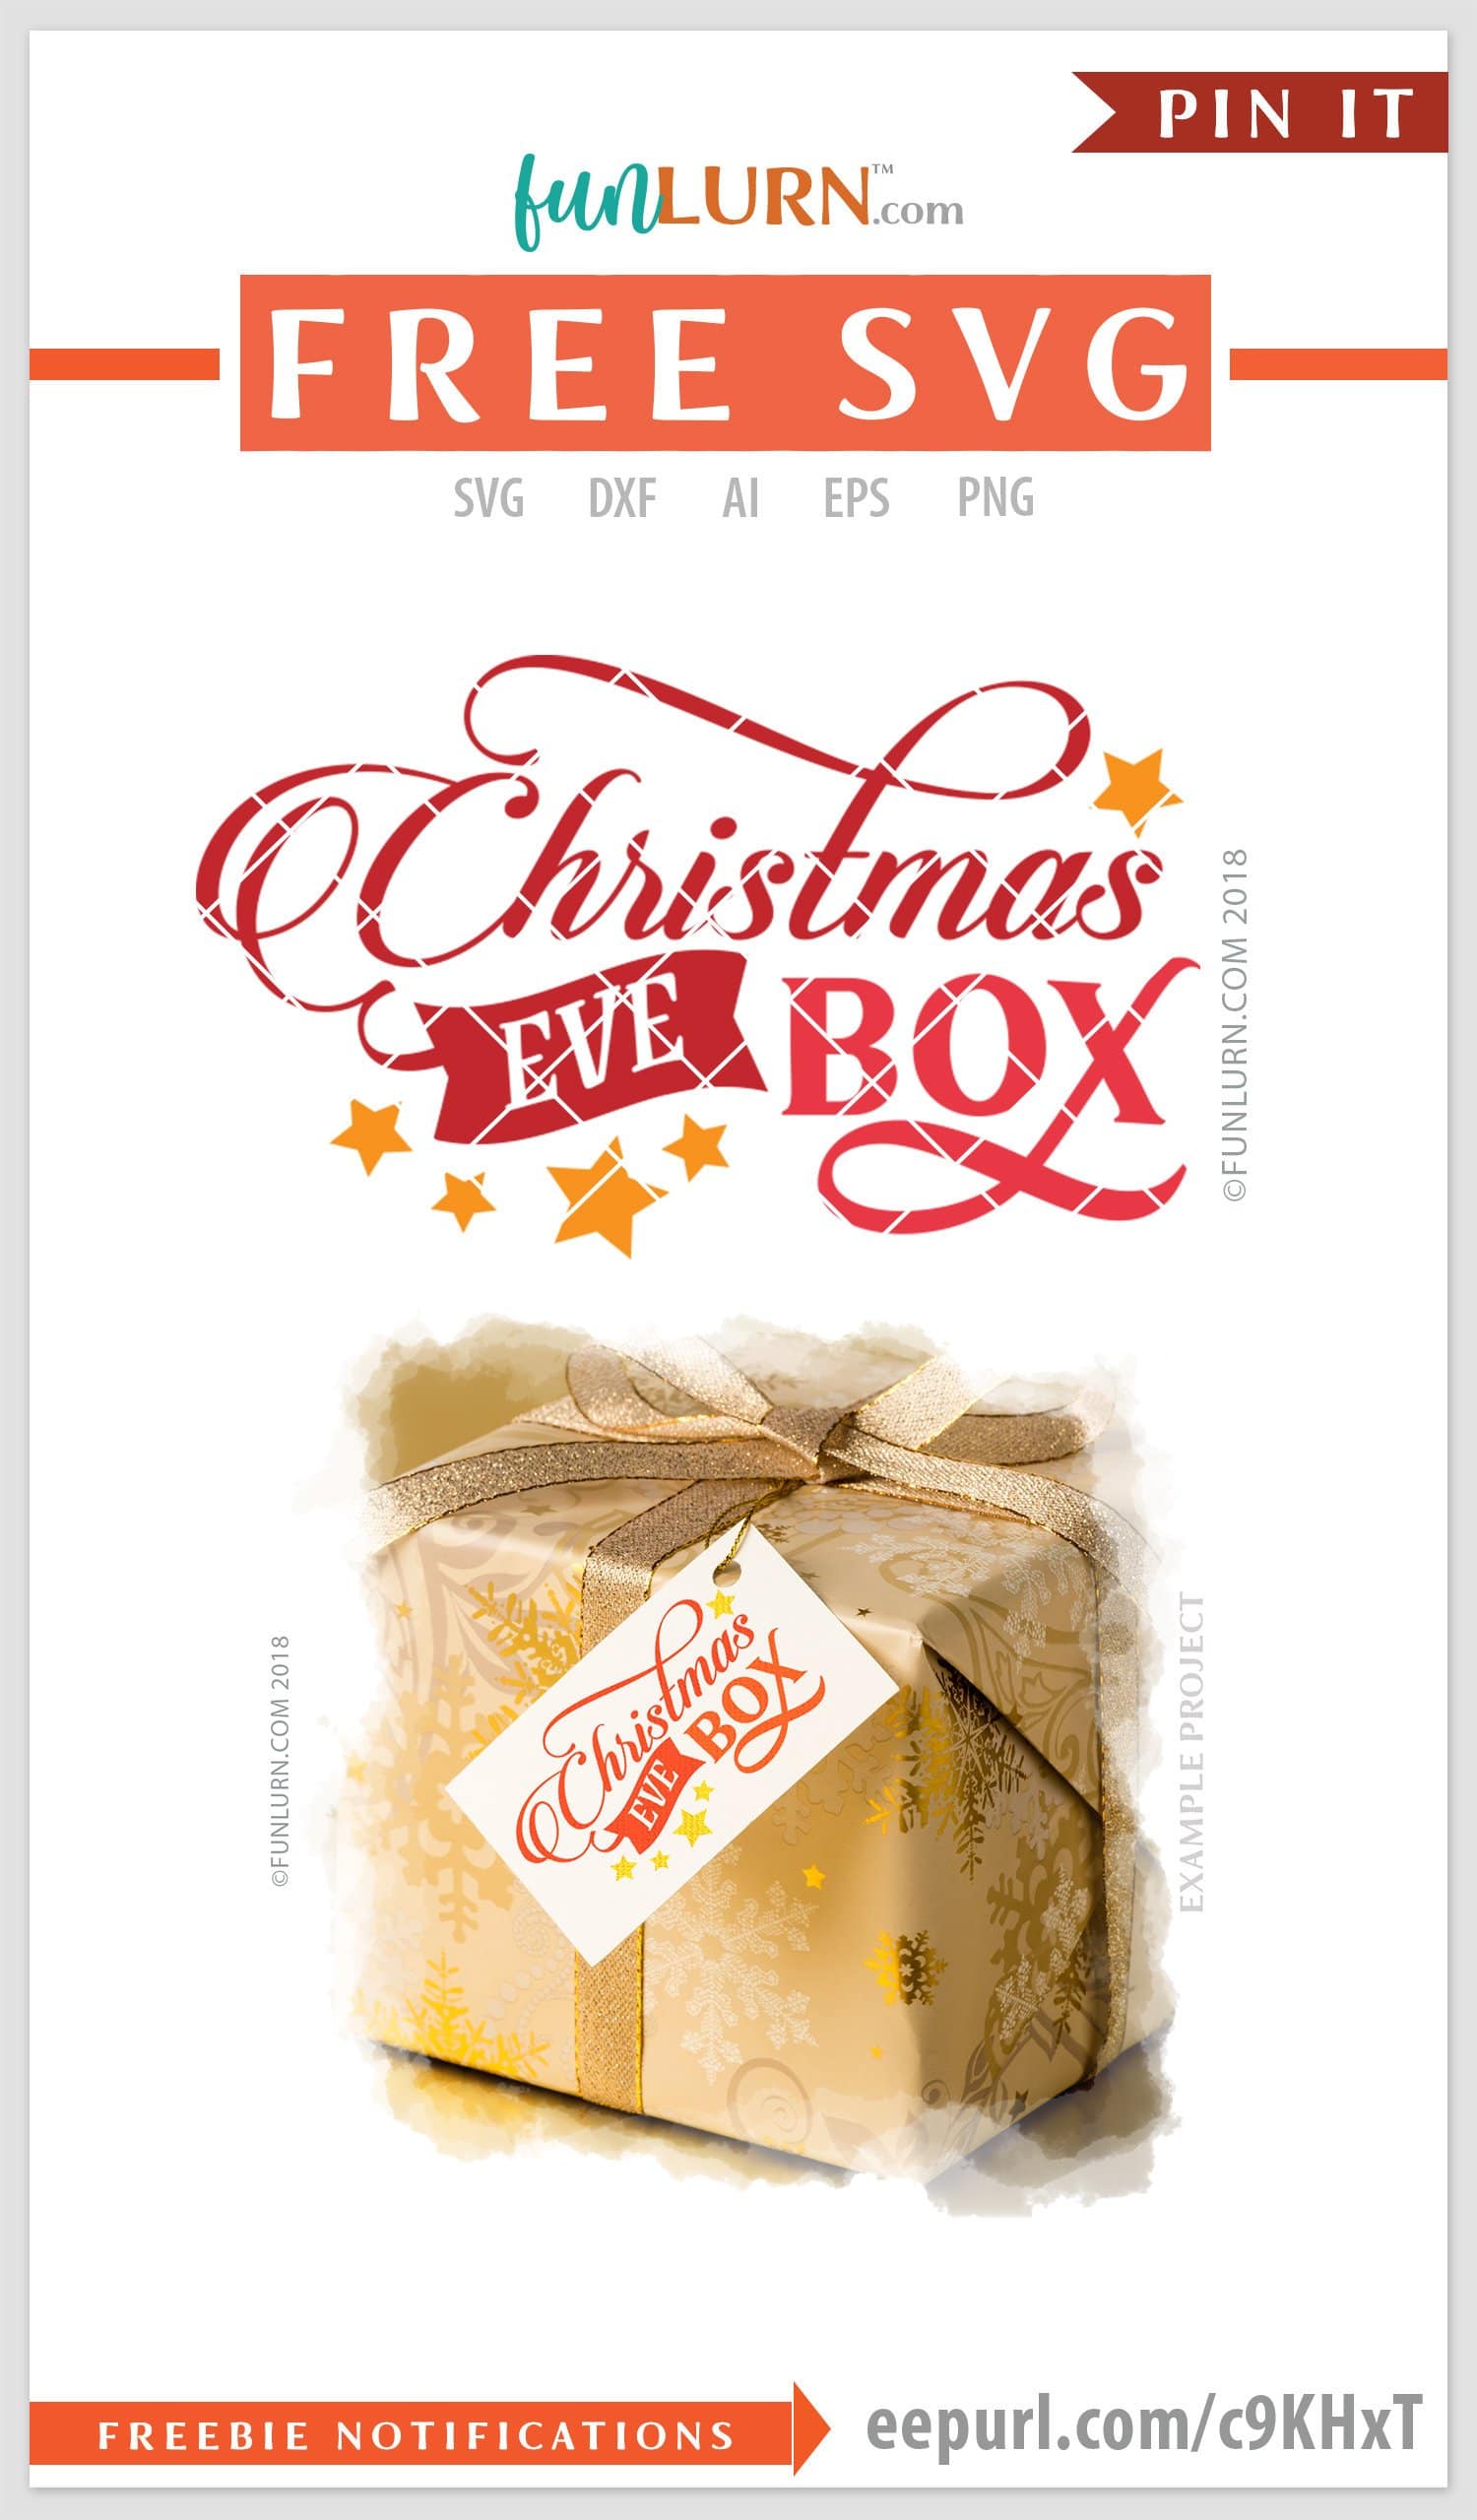 Download Christmas Eve Box SVG - FunLurn